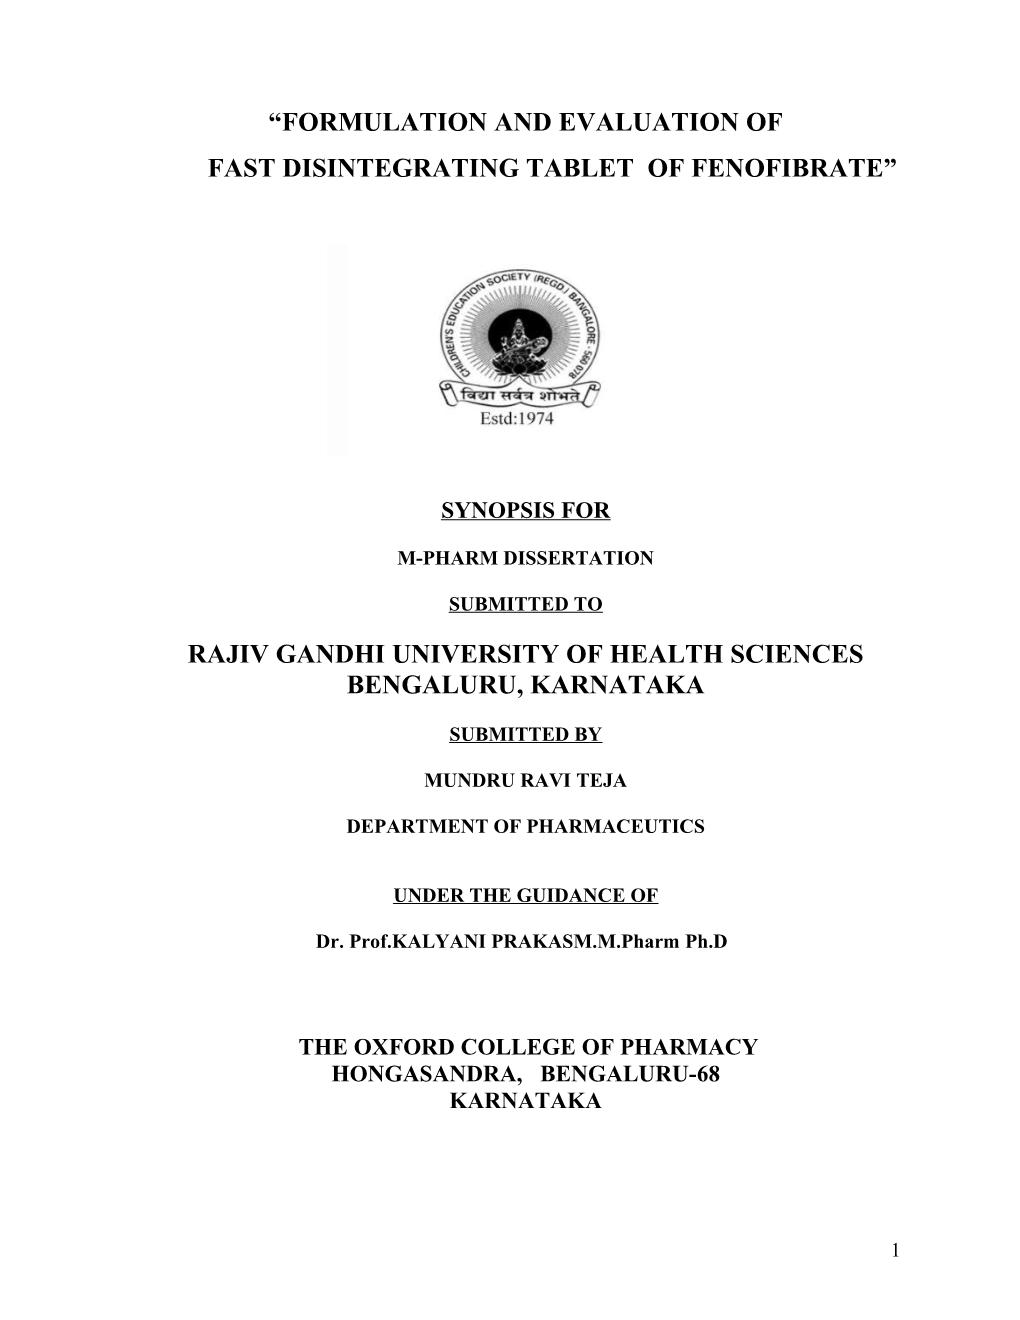 Rajiv Gandhi University of Health Sciences s283